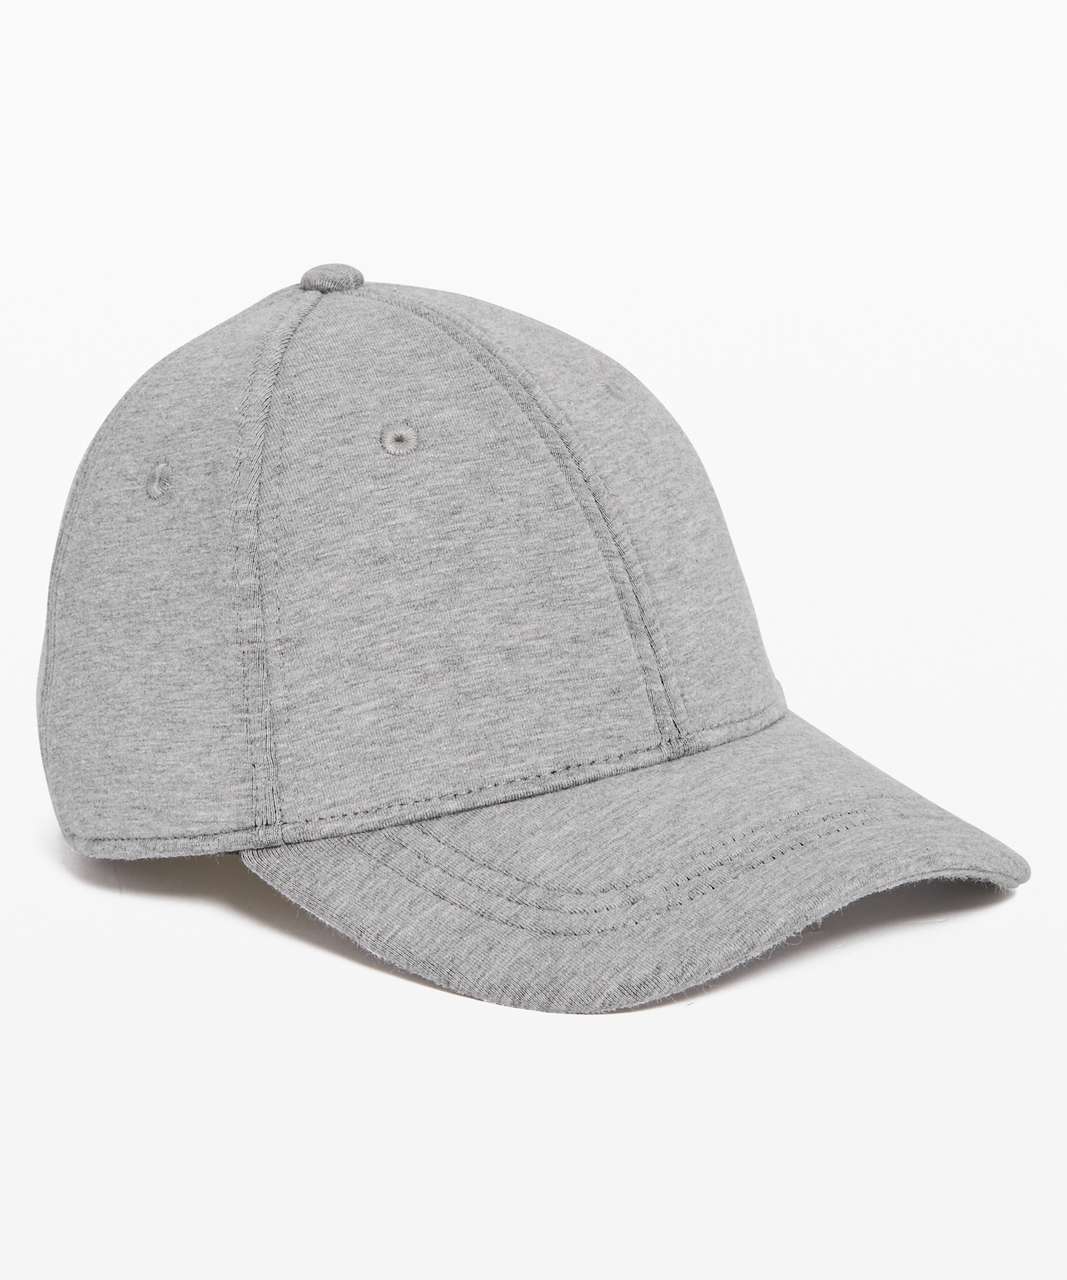 Lululemon Baller Hat - Heathered Medium Grey / Black